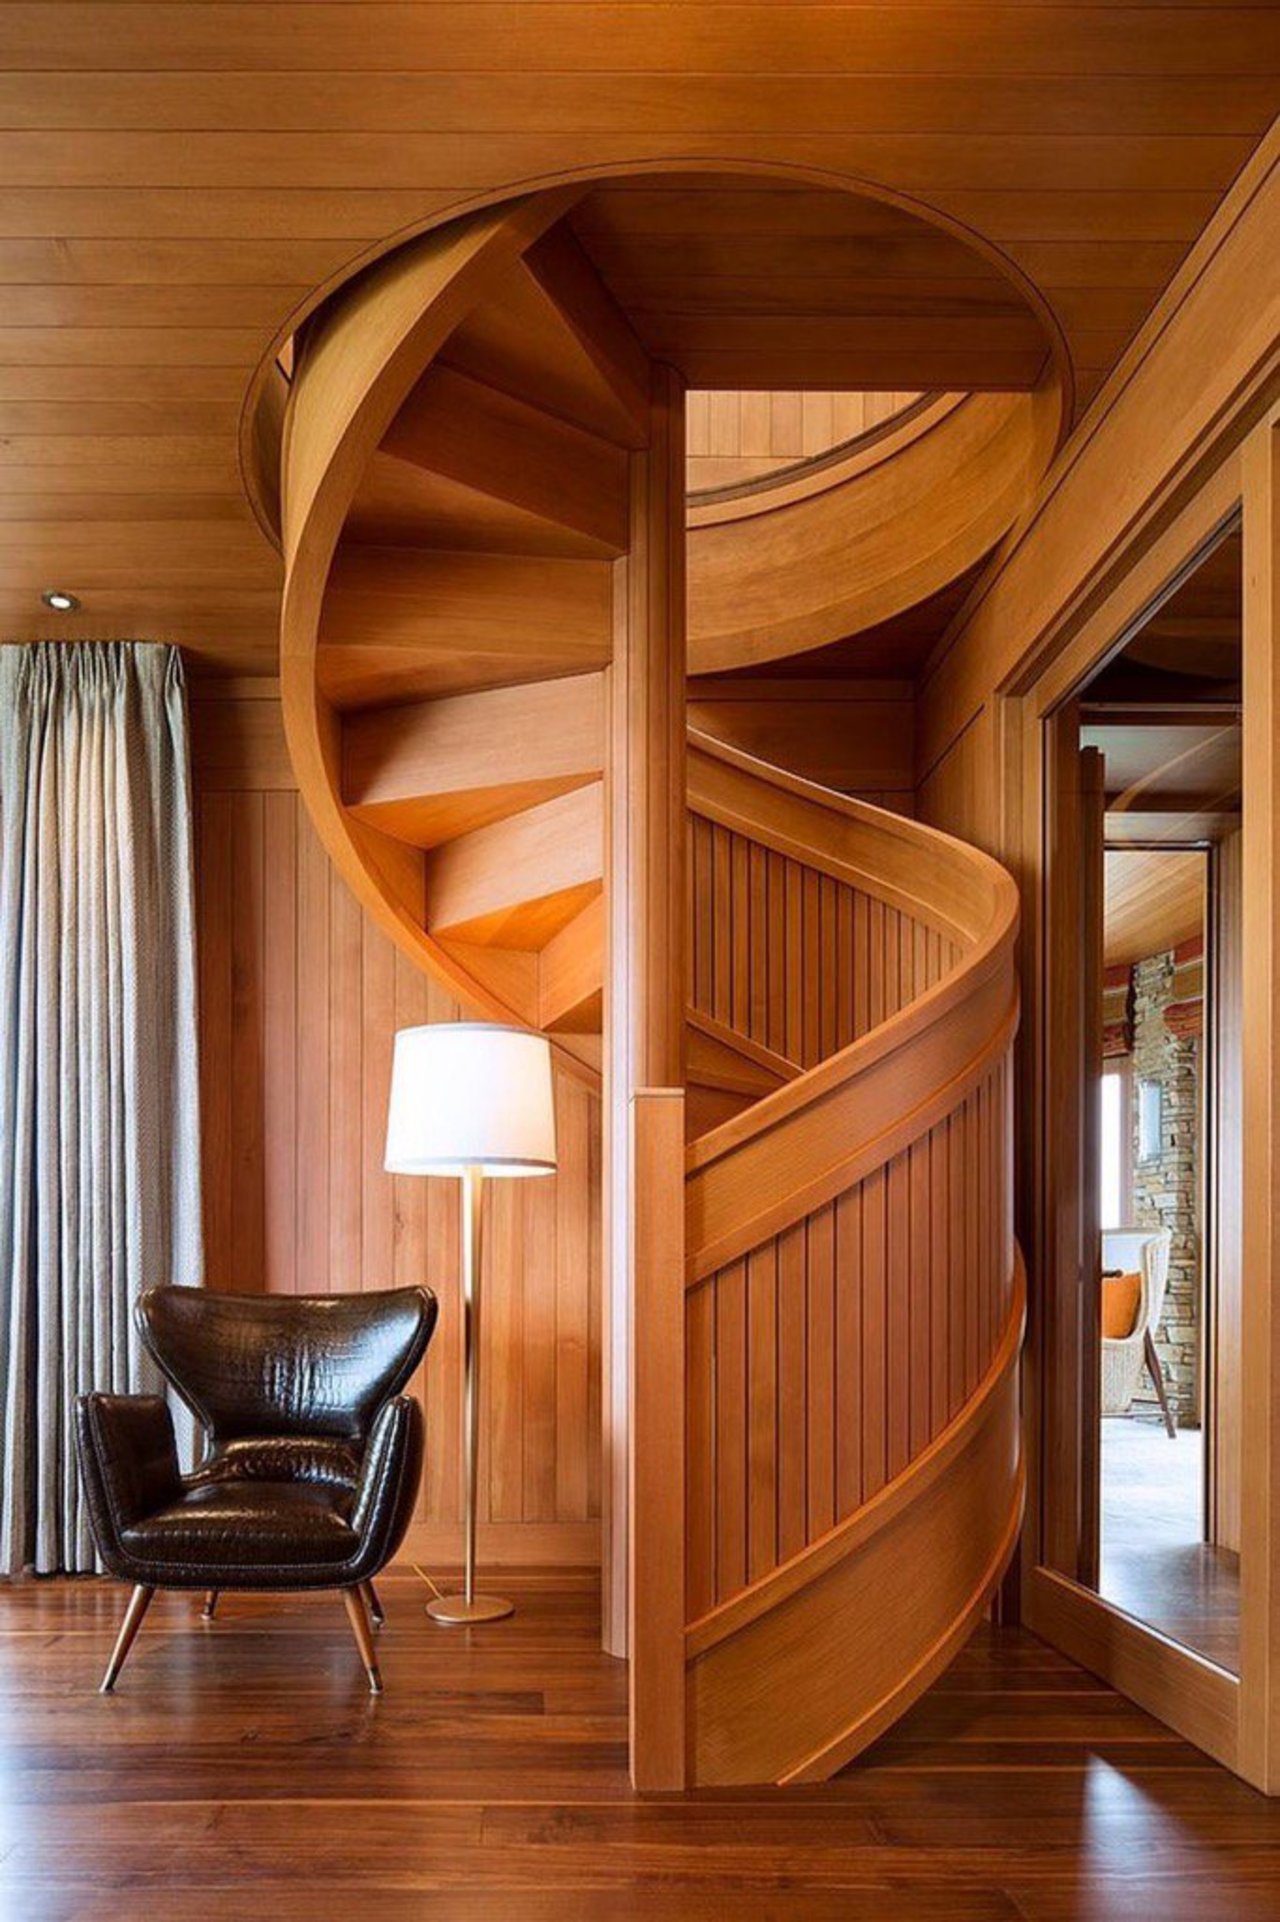 RT https://twitter.com/DesignbyAngela2/status/798006991142600705 WOW! Stunning design! #woodworking #design #interior #ygk #Home #staircase #Spiral #wo… https://t.co/TW3hE06TTl